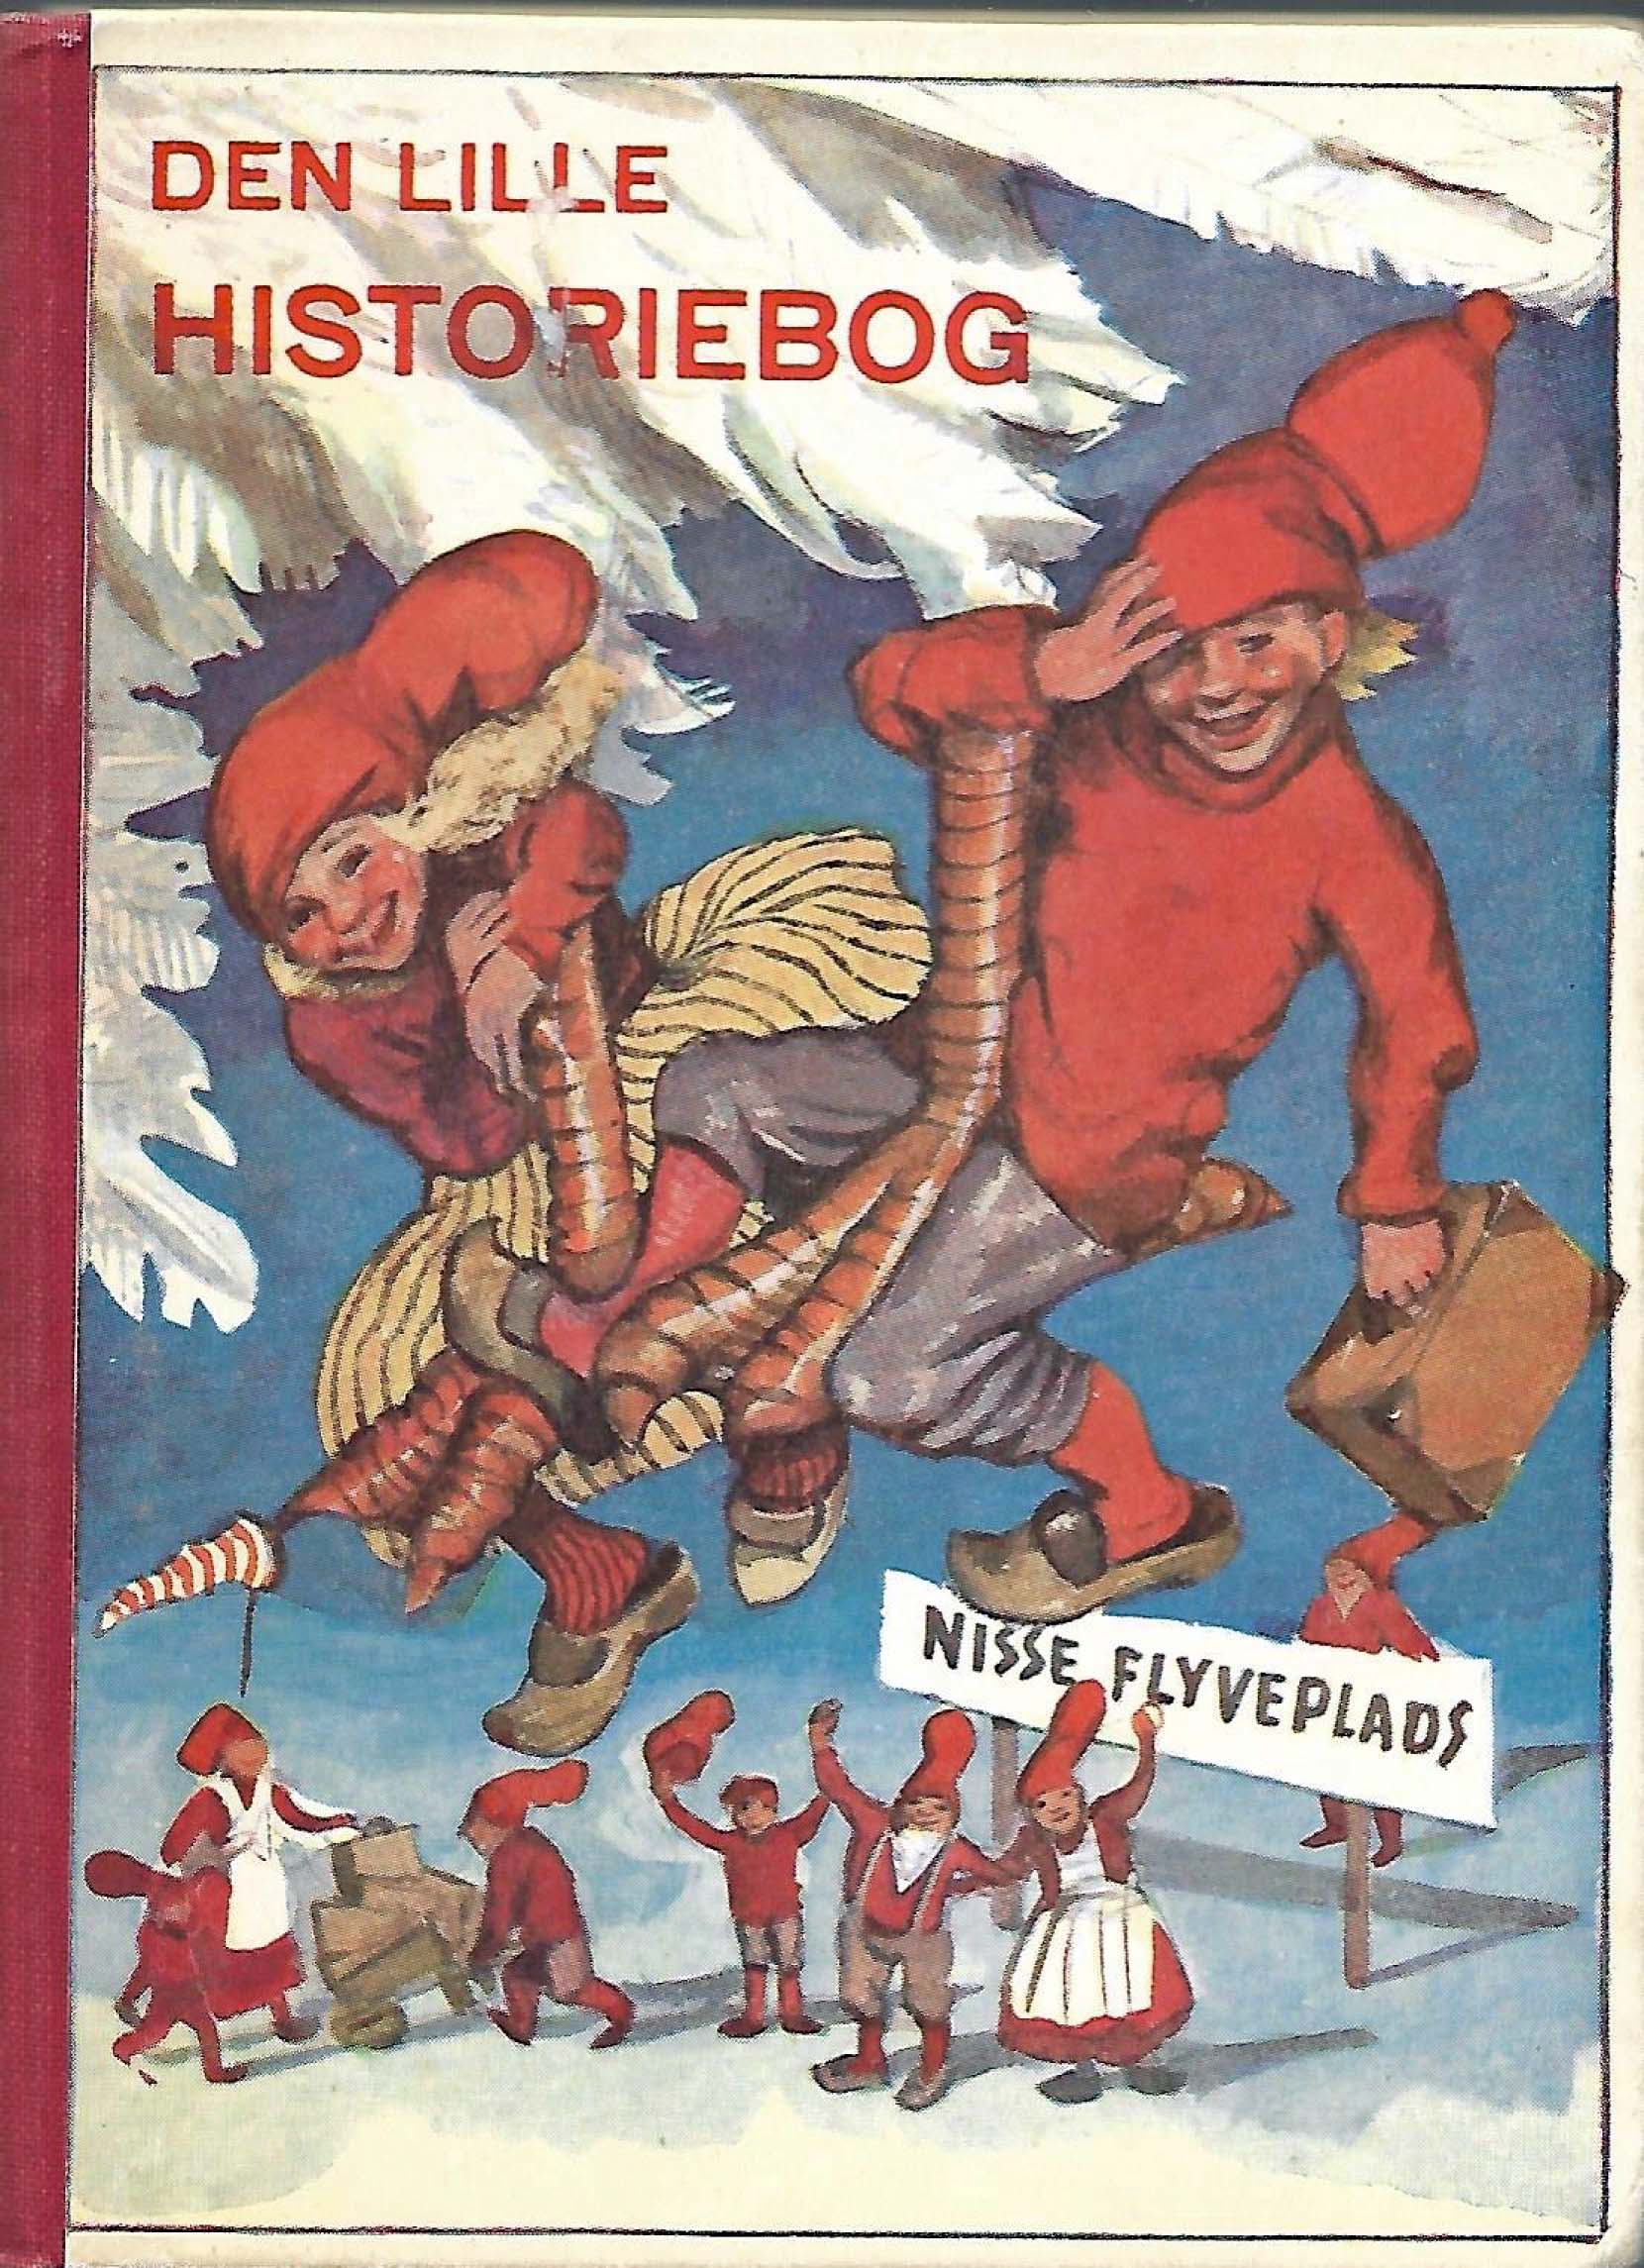 1961 Den lille Historiebog